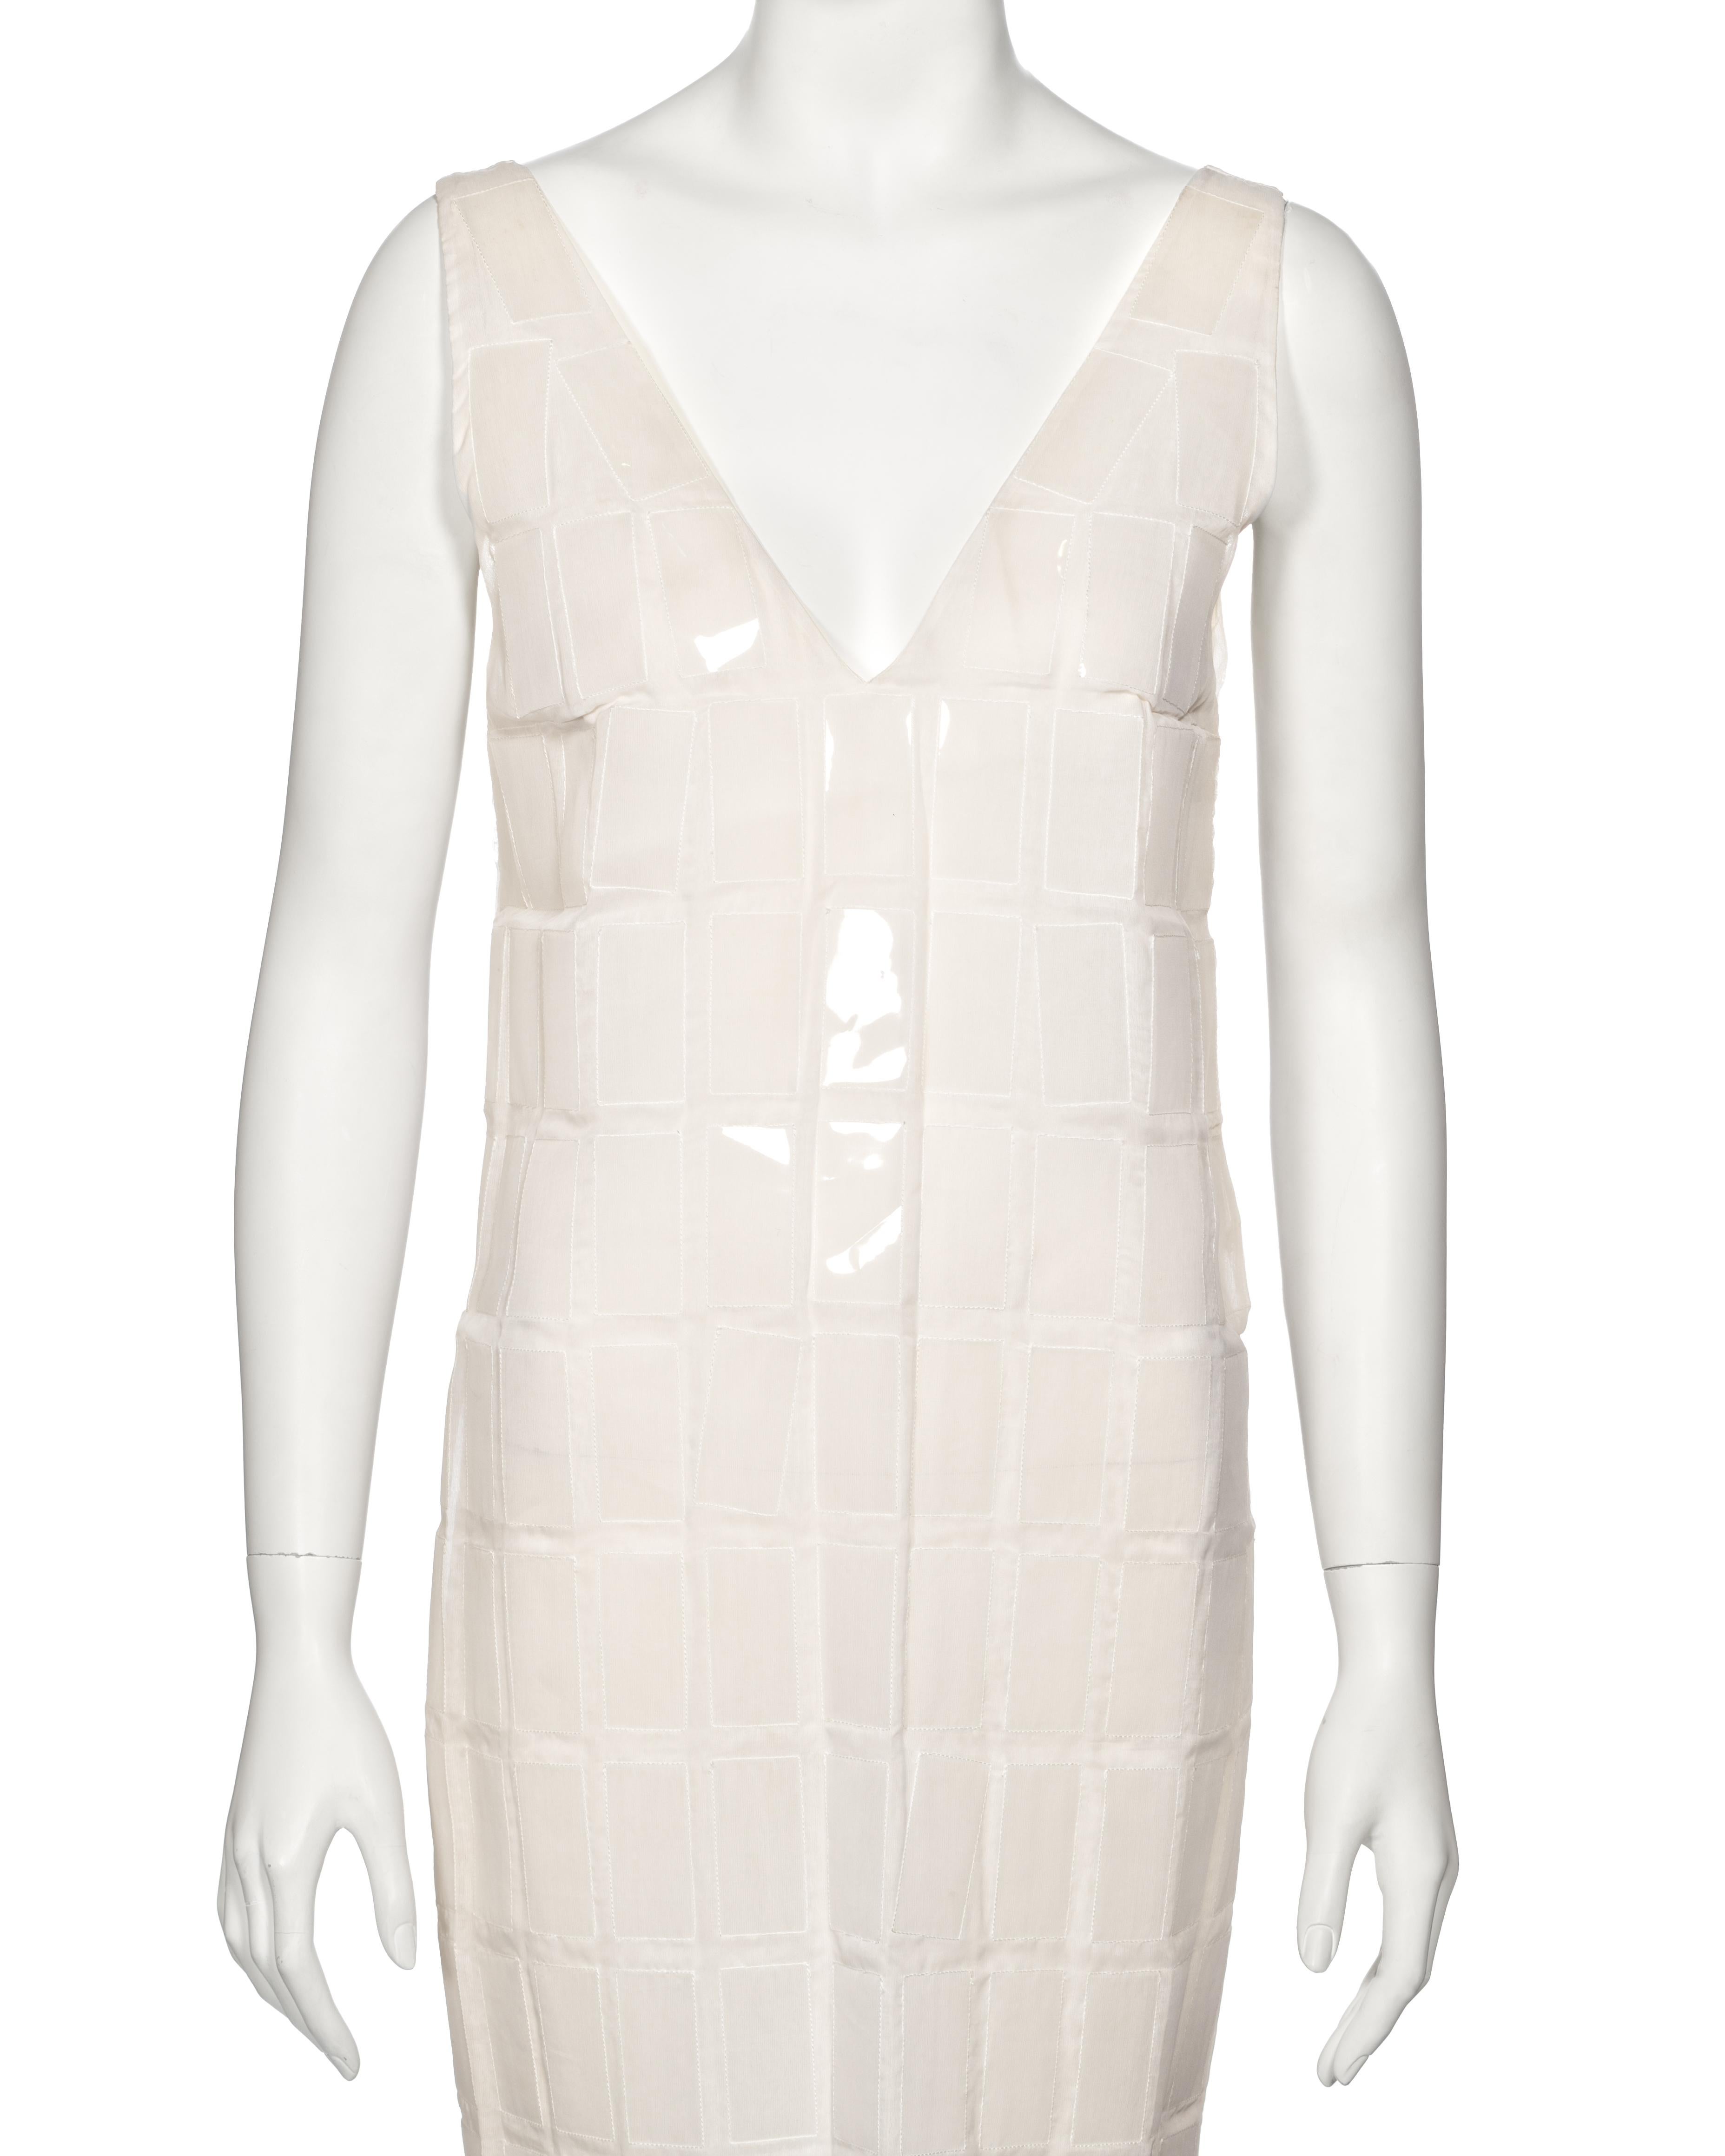 Prada by Miuccia Prada White Silk and Plastic Tile Shift Dress, fw 1998 In Excellent Condition For Sale In London, GB